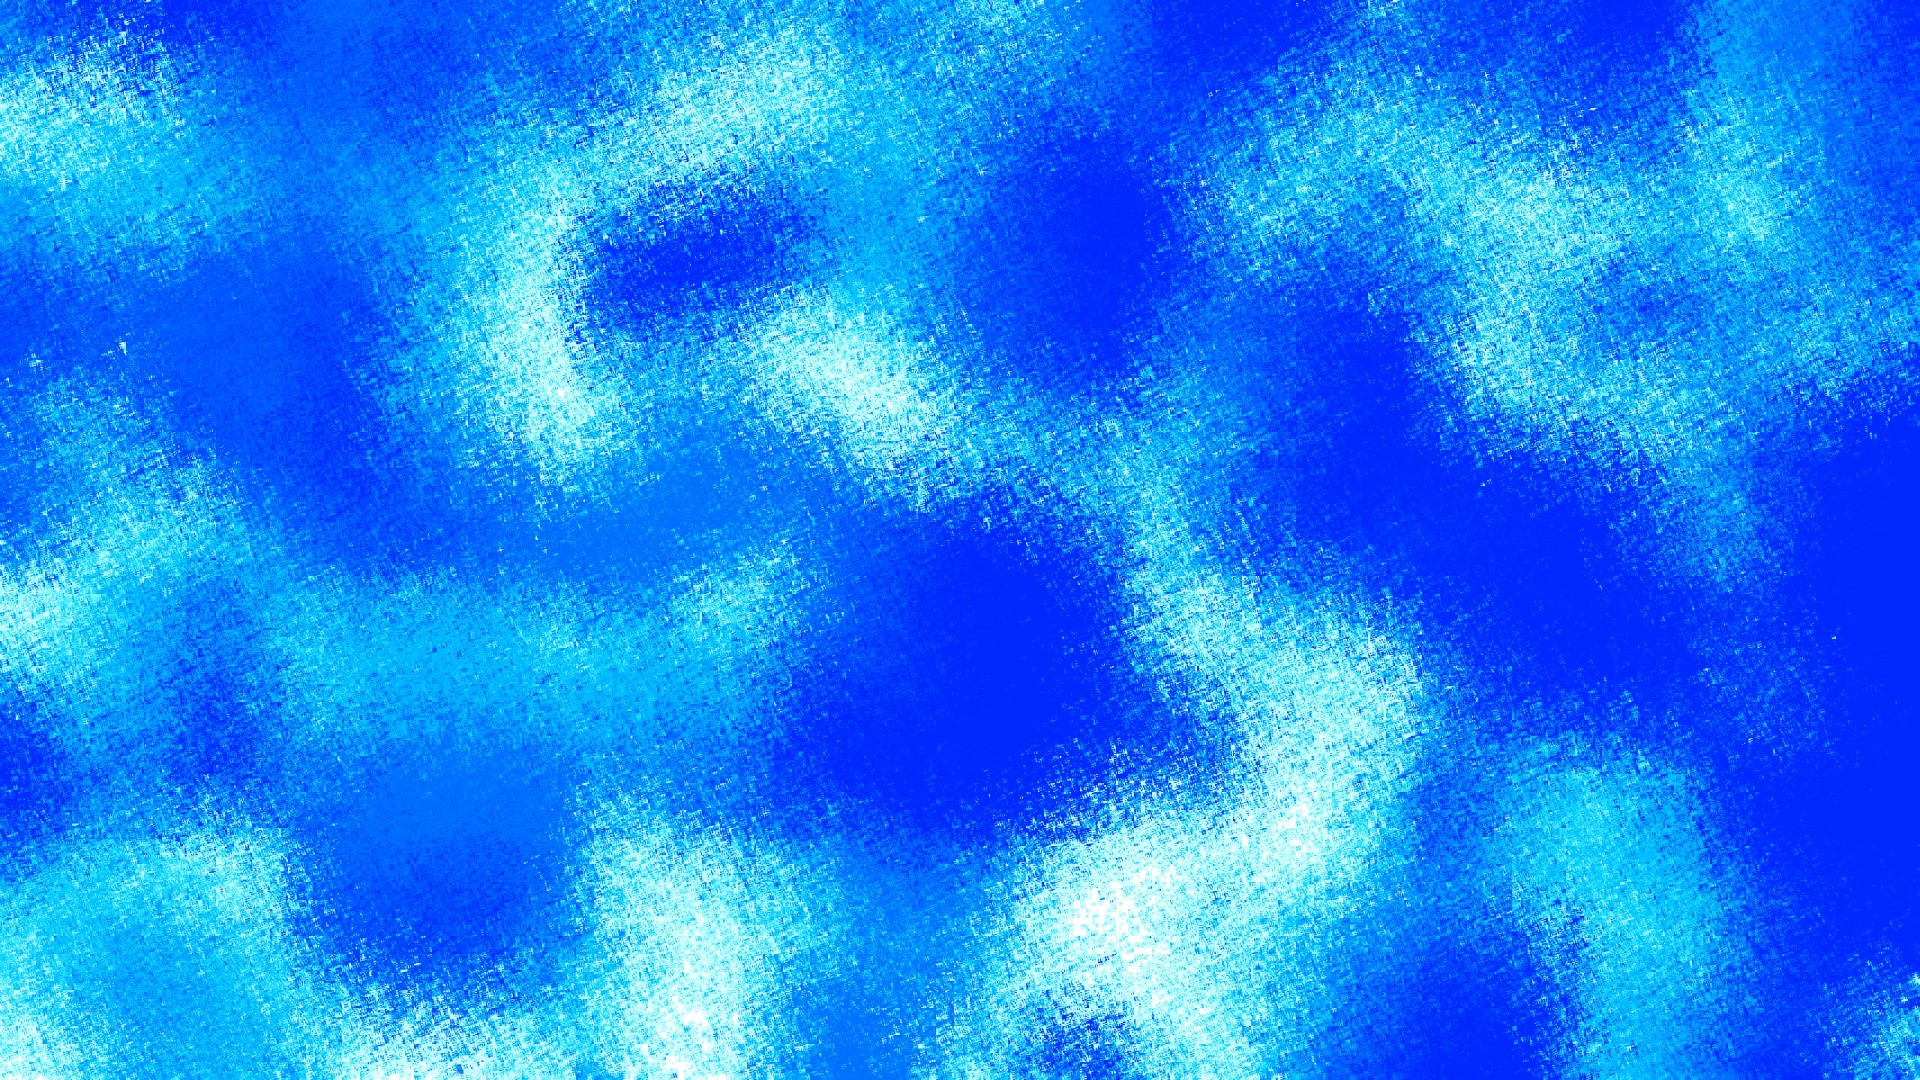 Hazy Blue Wallpaper Background